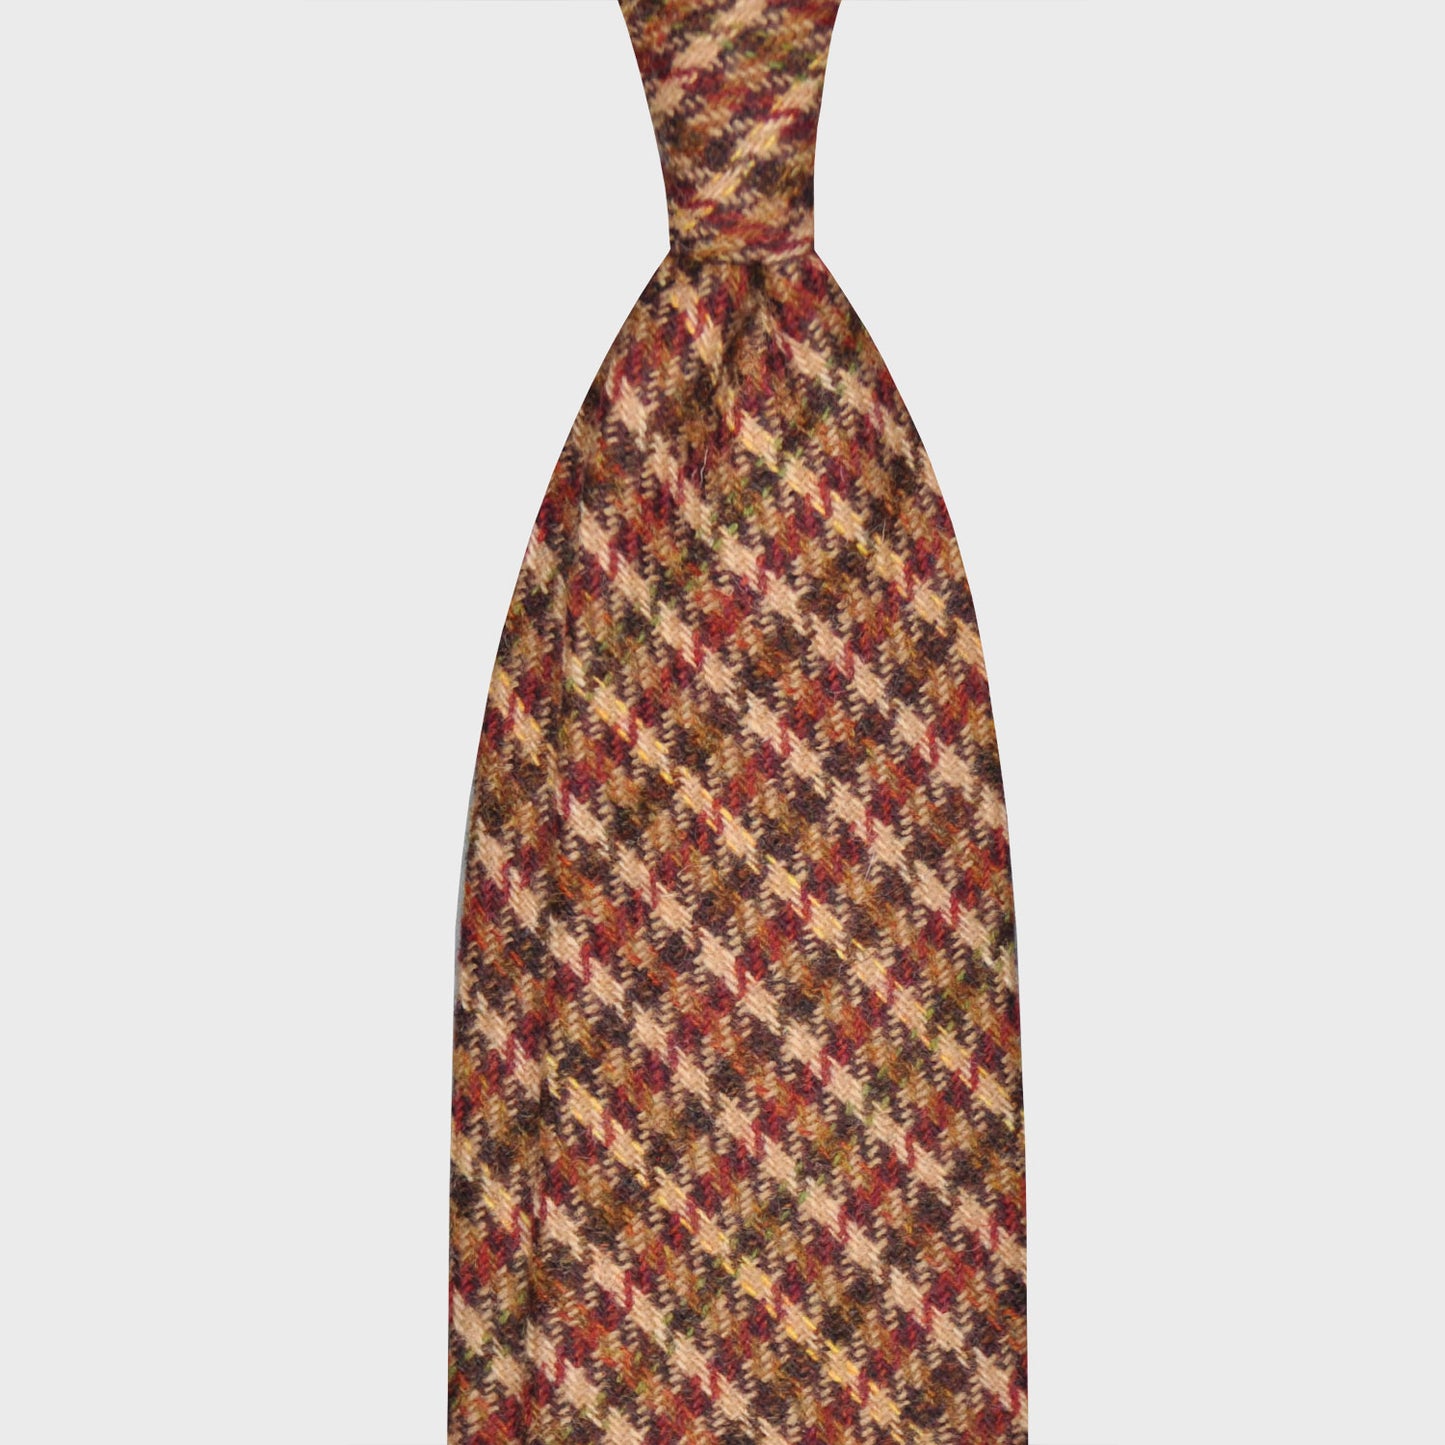 F.Marino Checks Tweed Tie 3 Folds Cherry-Wools Boutique Uomo